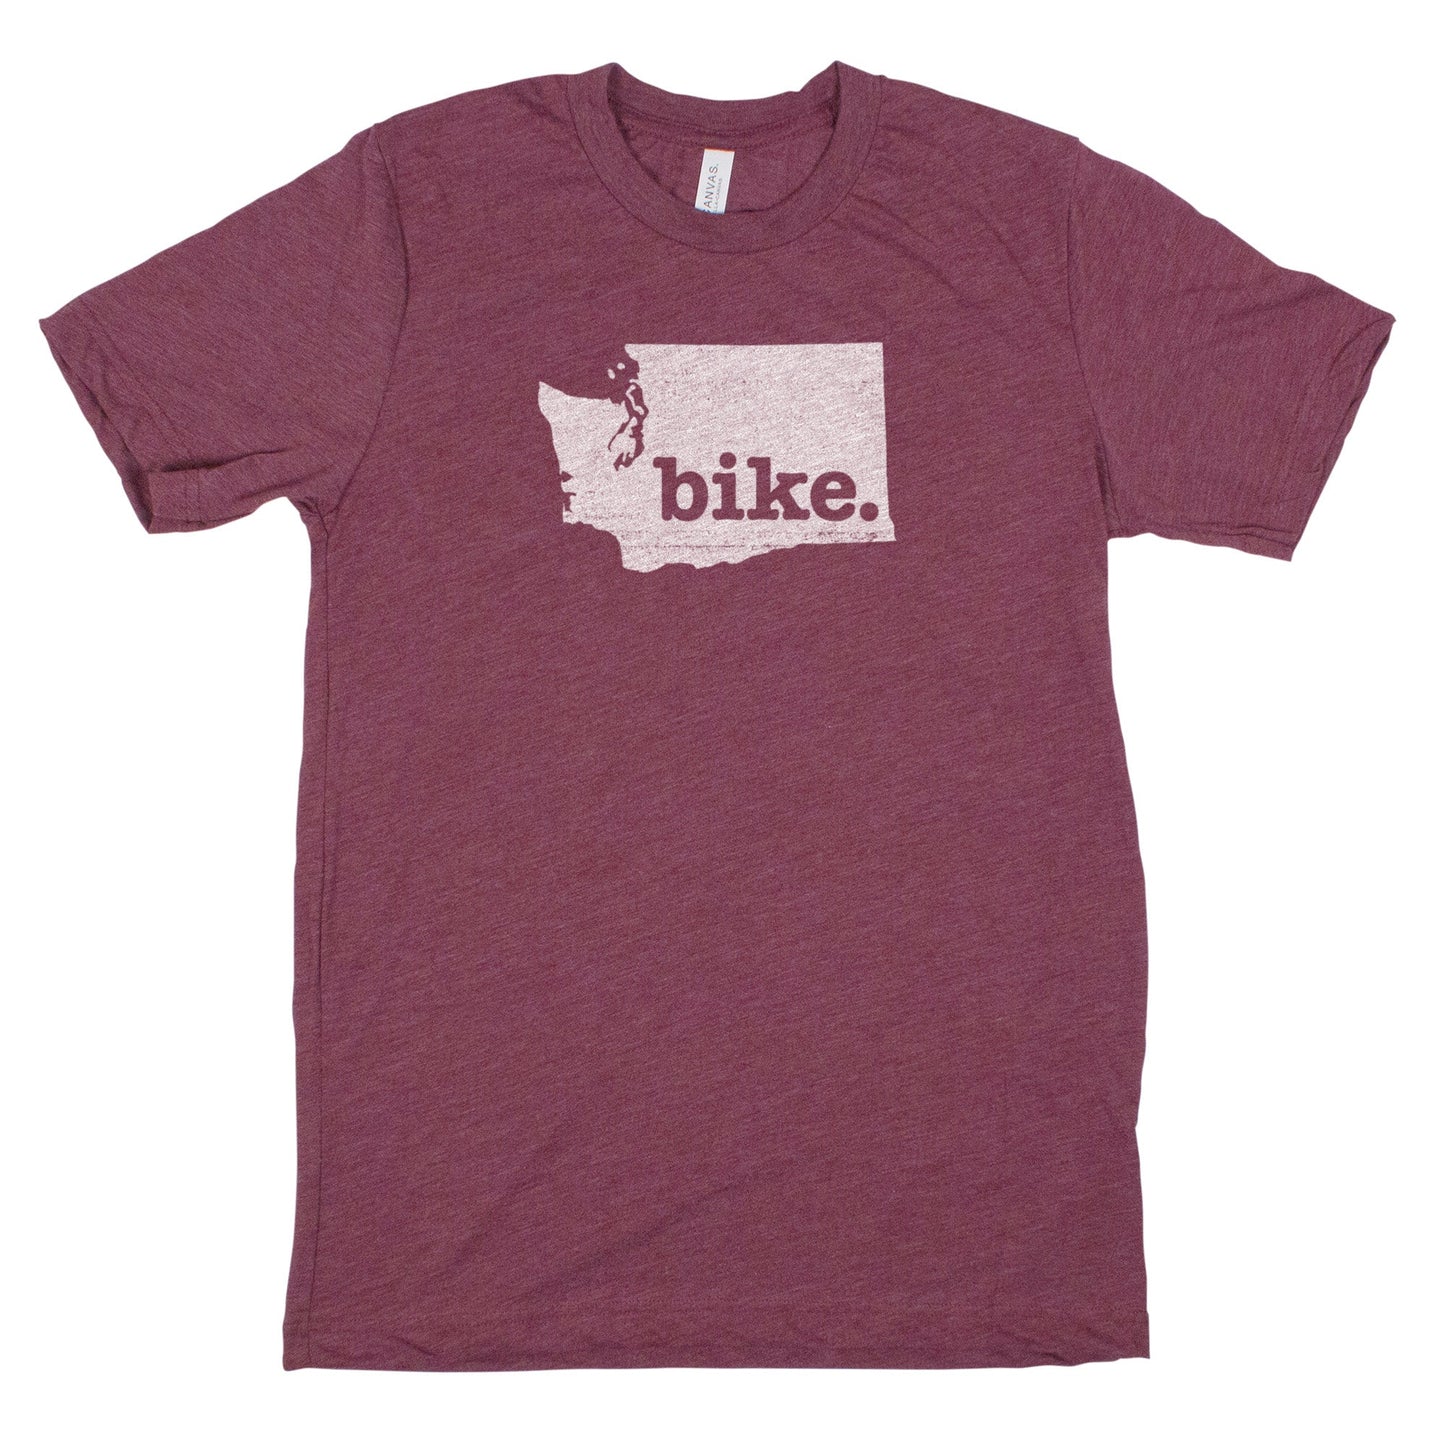 bike. Men's Unisex T-Shirt - Washington